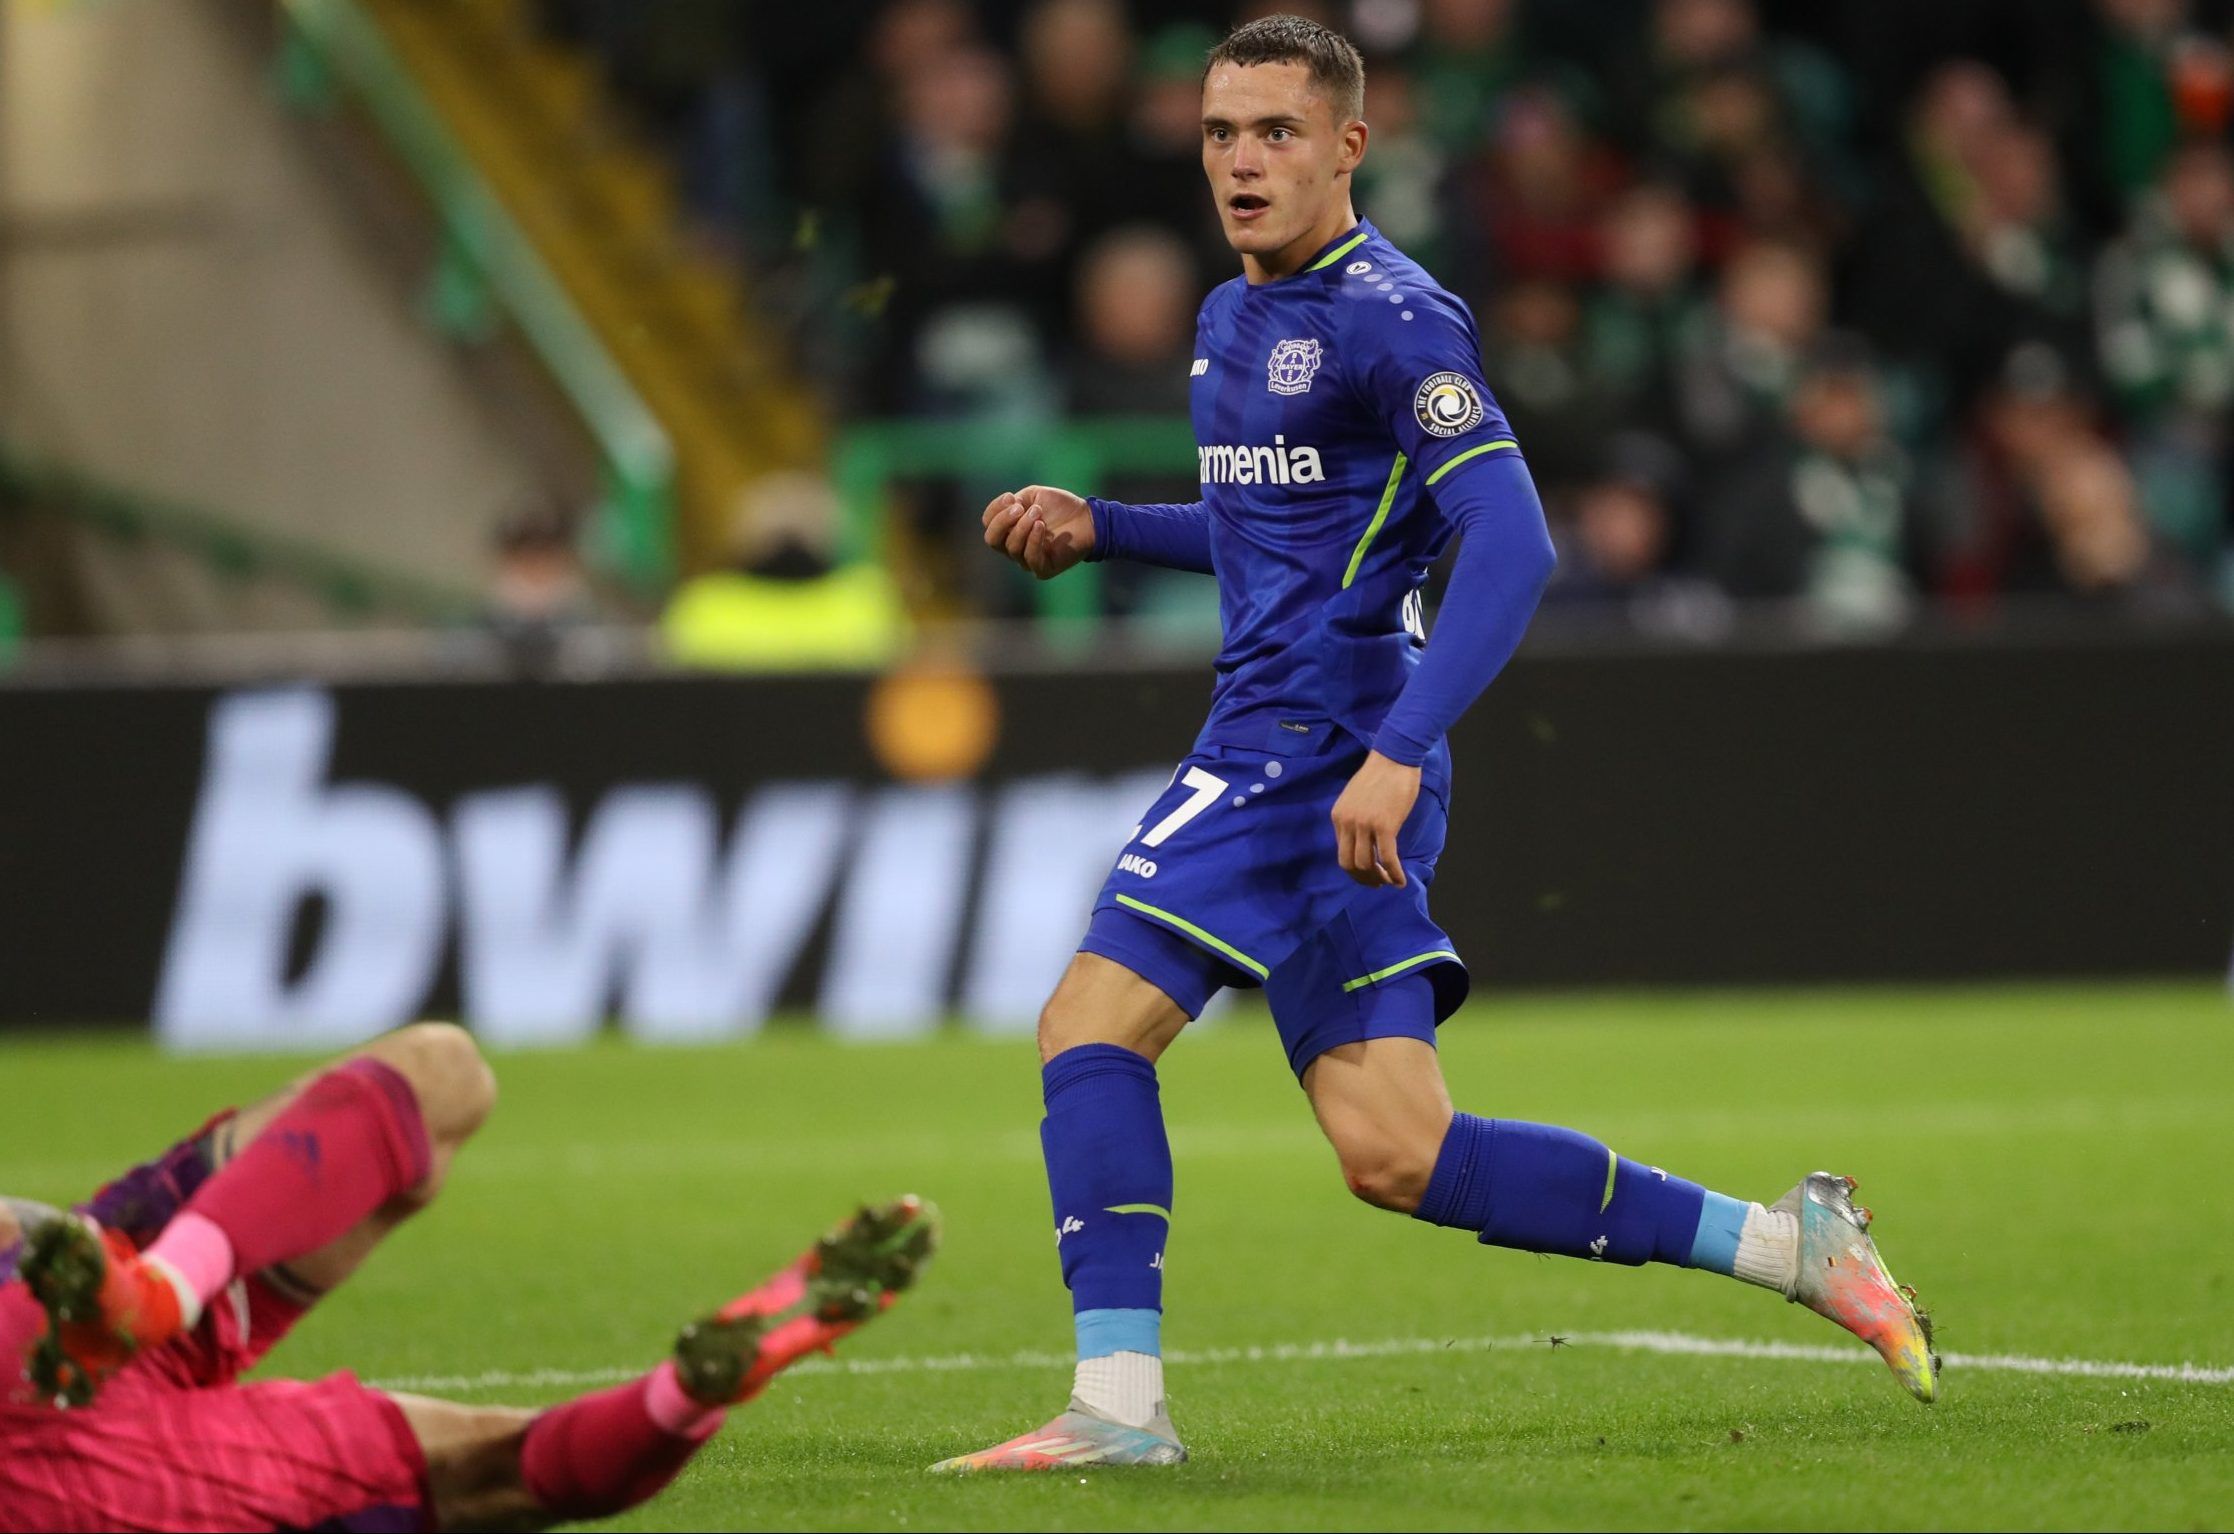 Bayer Leverkusen's Florian Wirtz scores against Celtic in the Europa League